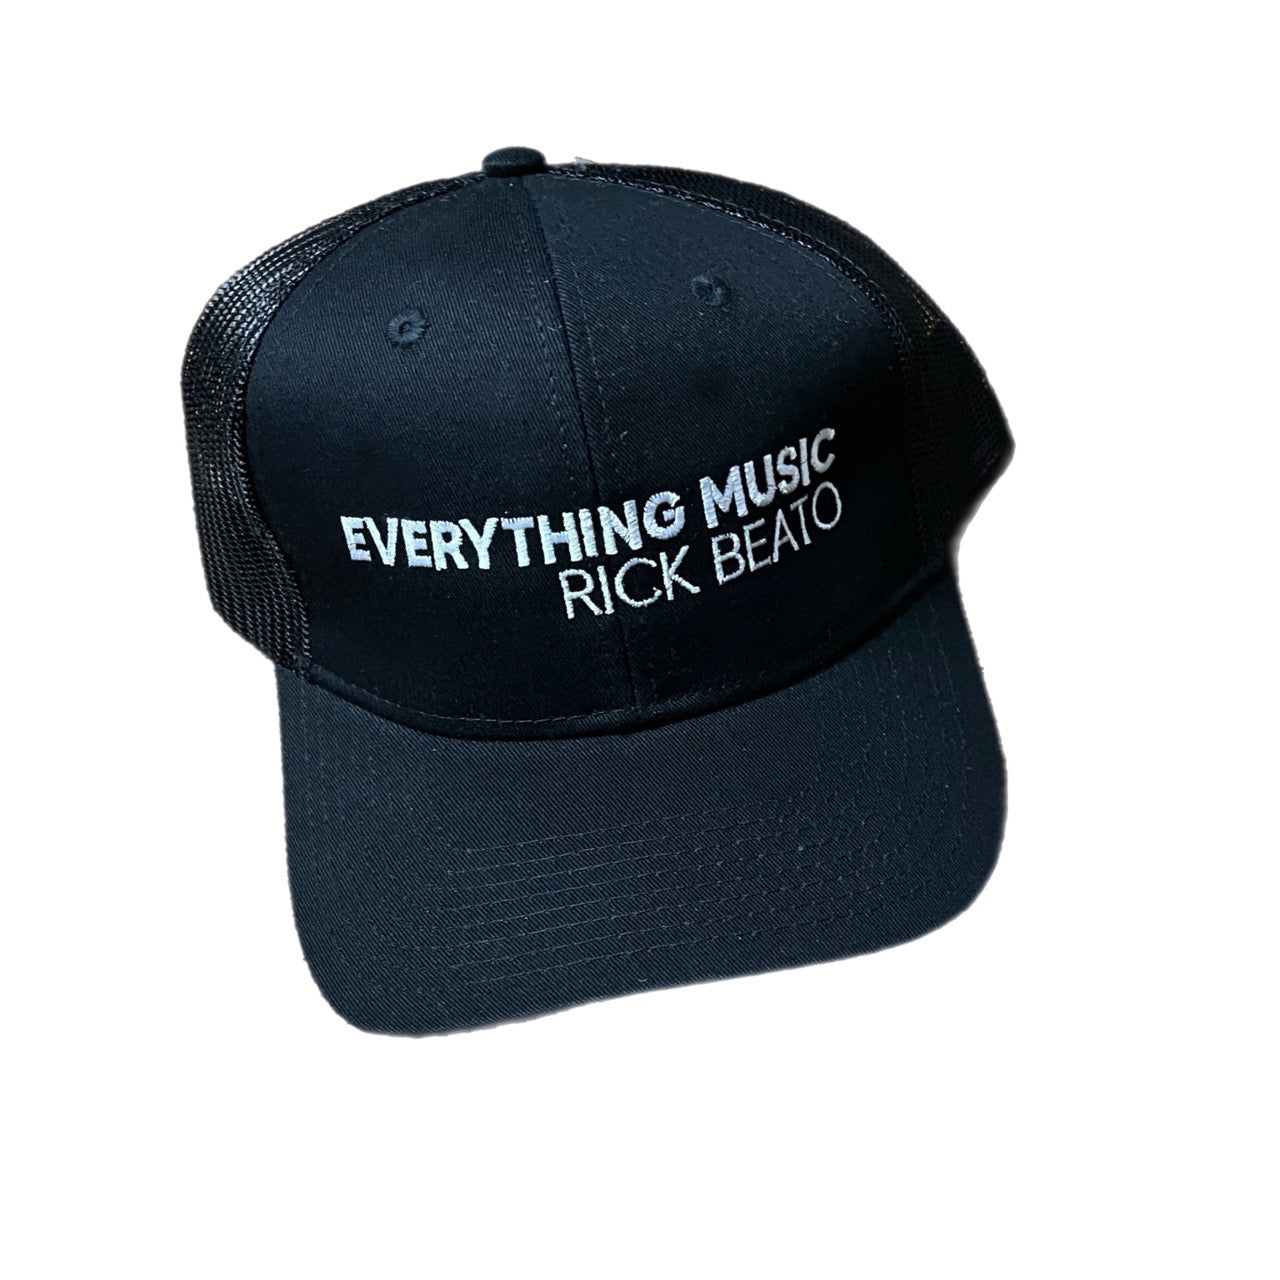 "Rick Beato - Everything Music" Baseball Hat